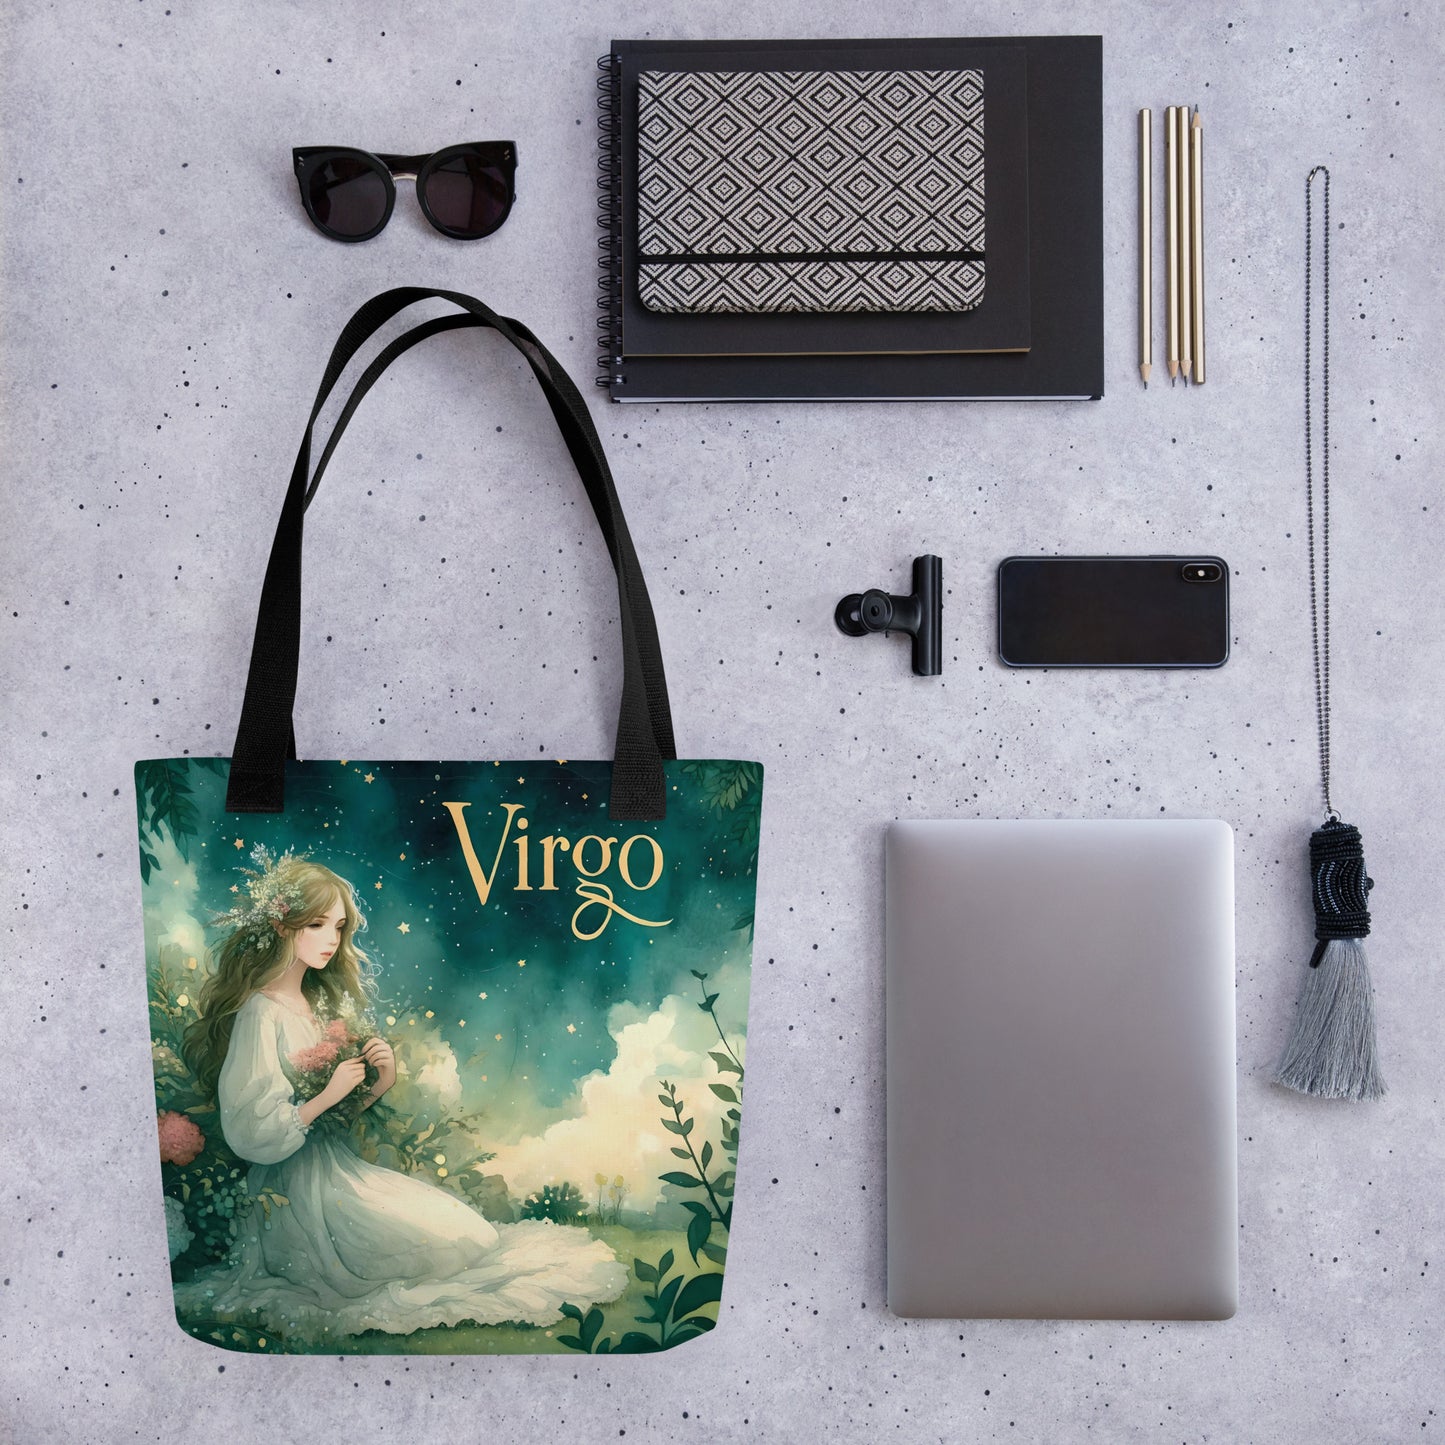 Virgo Horoscope Tote Bag